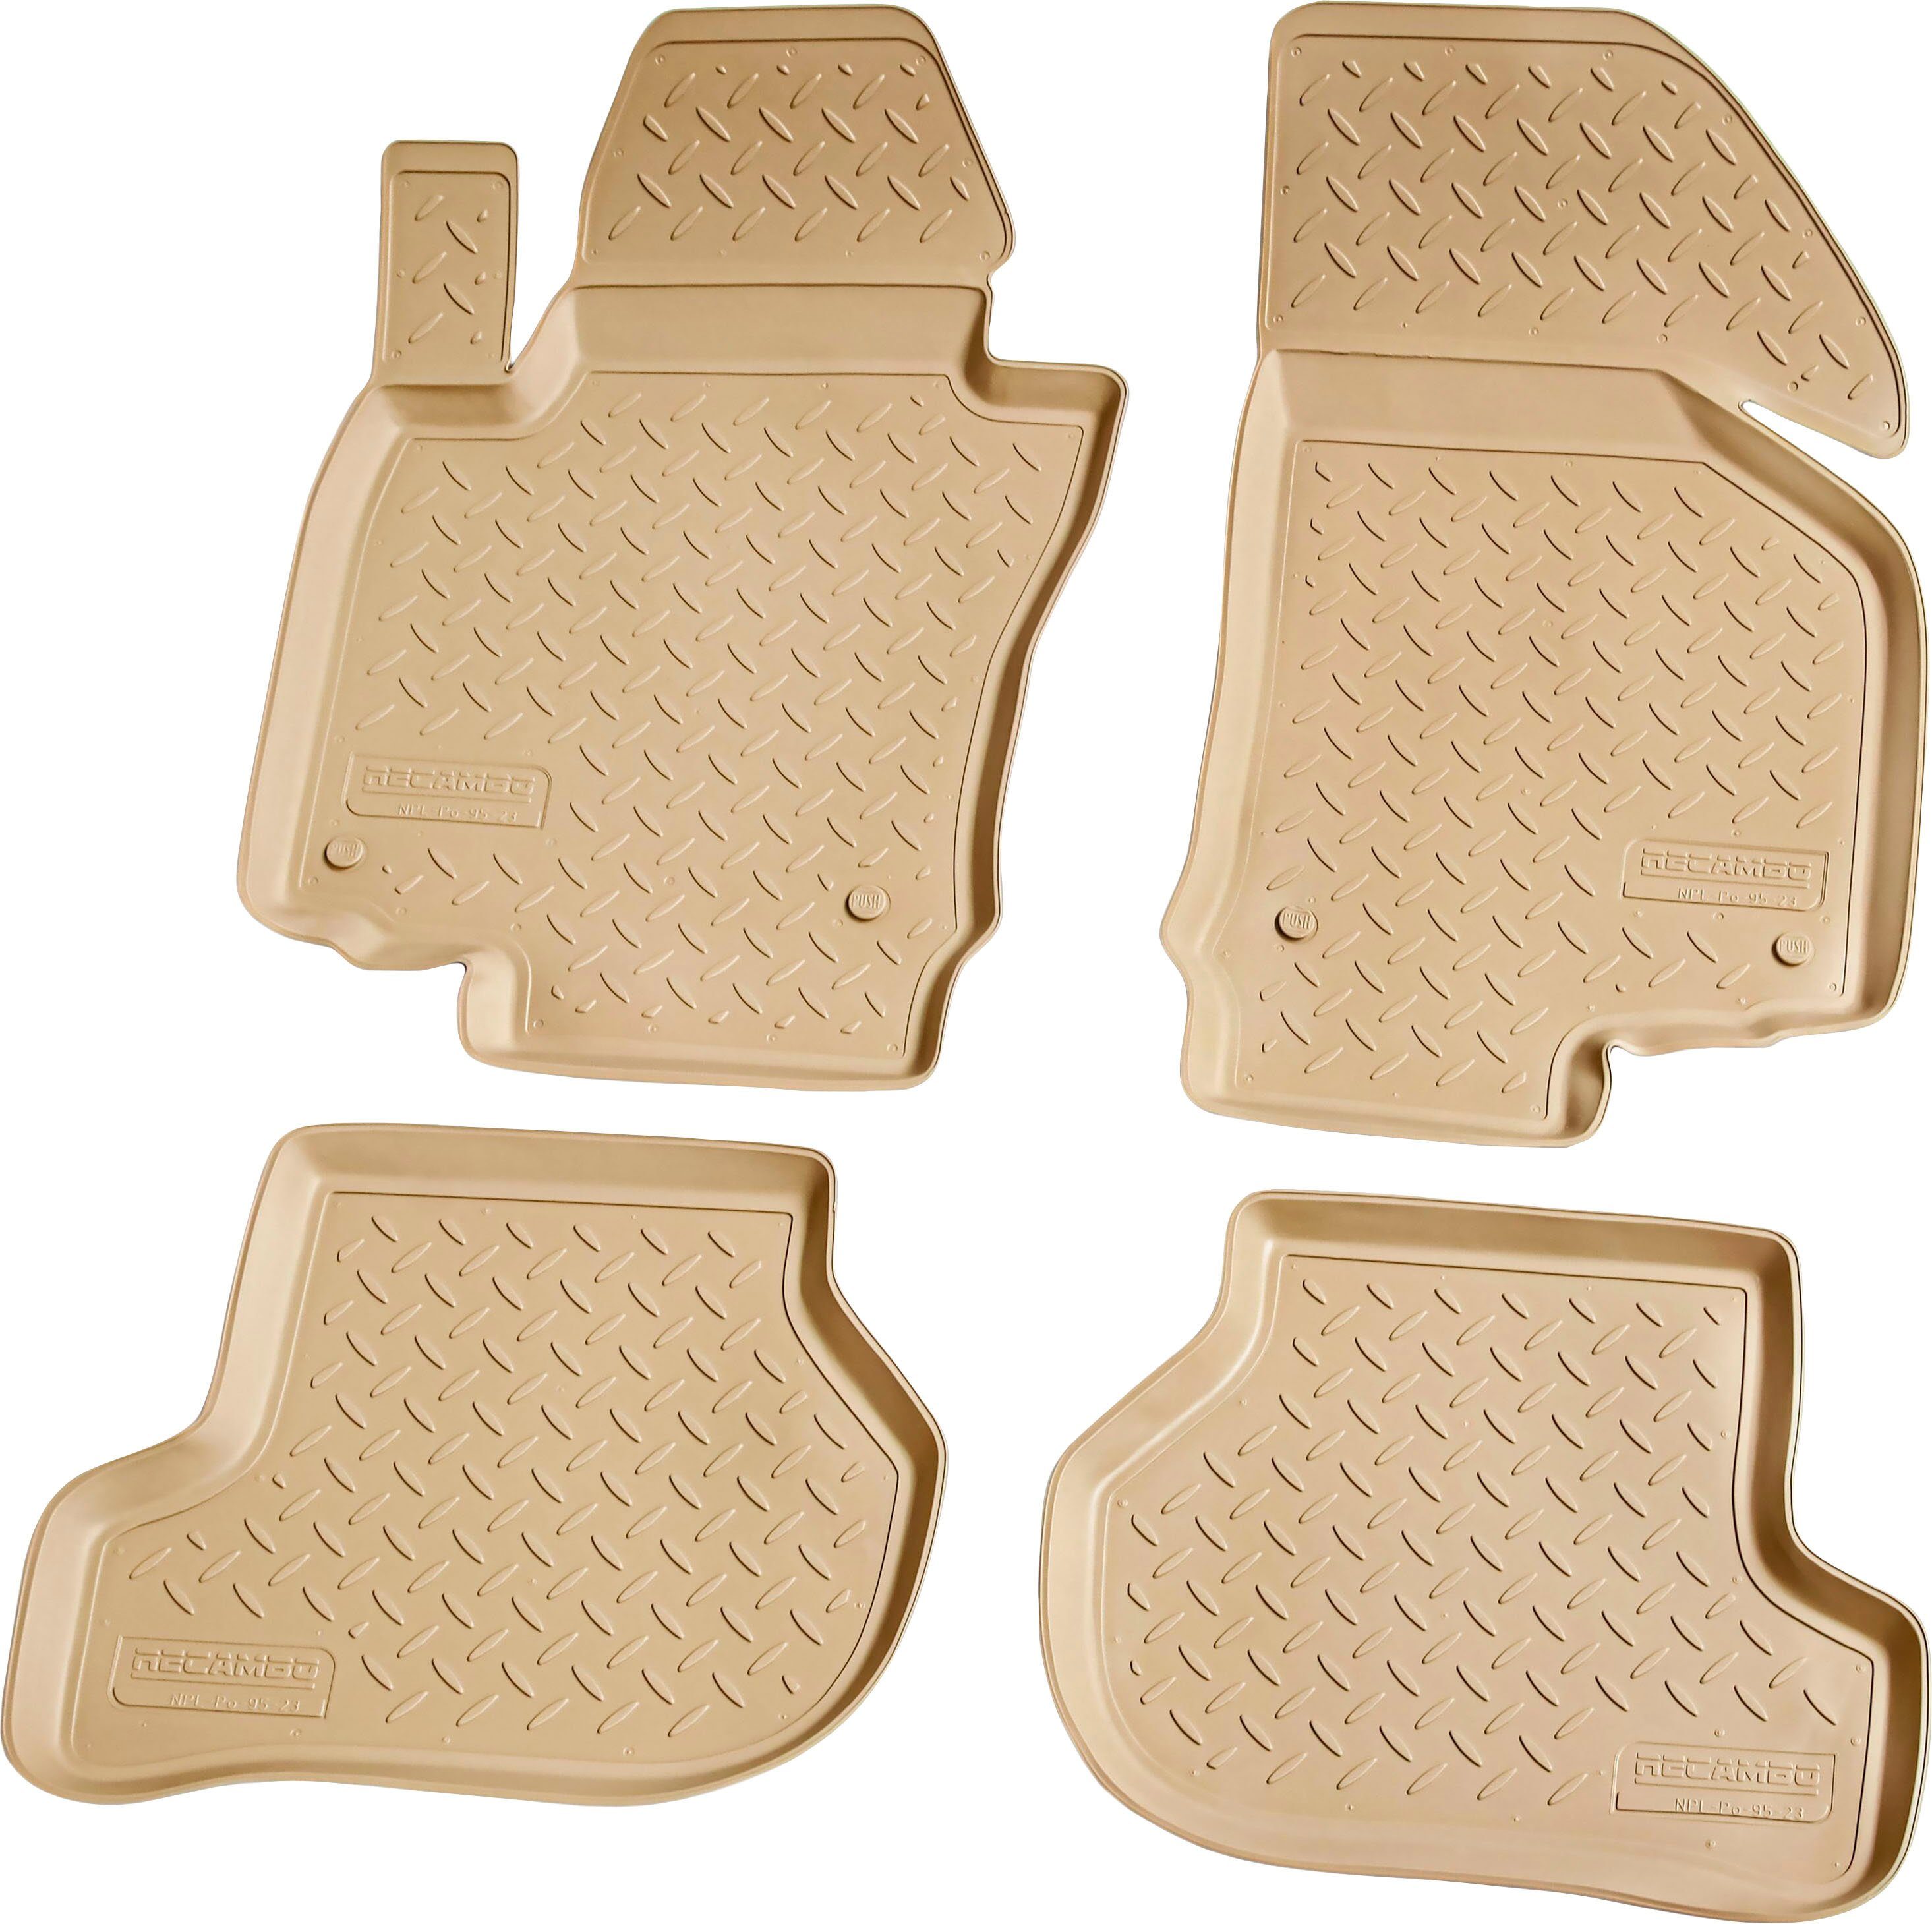 RECAMBO Passform-Fußmatten CustomComforts SEAT XL (4 Passform perfekte - Altea, 2015, Altea für 2004 St)